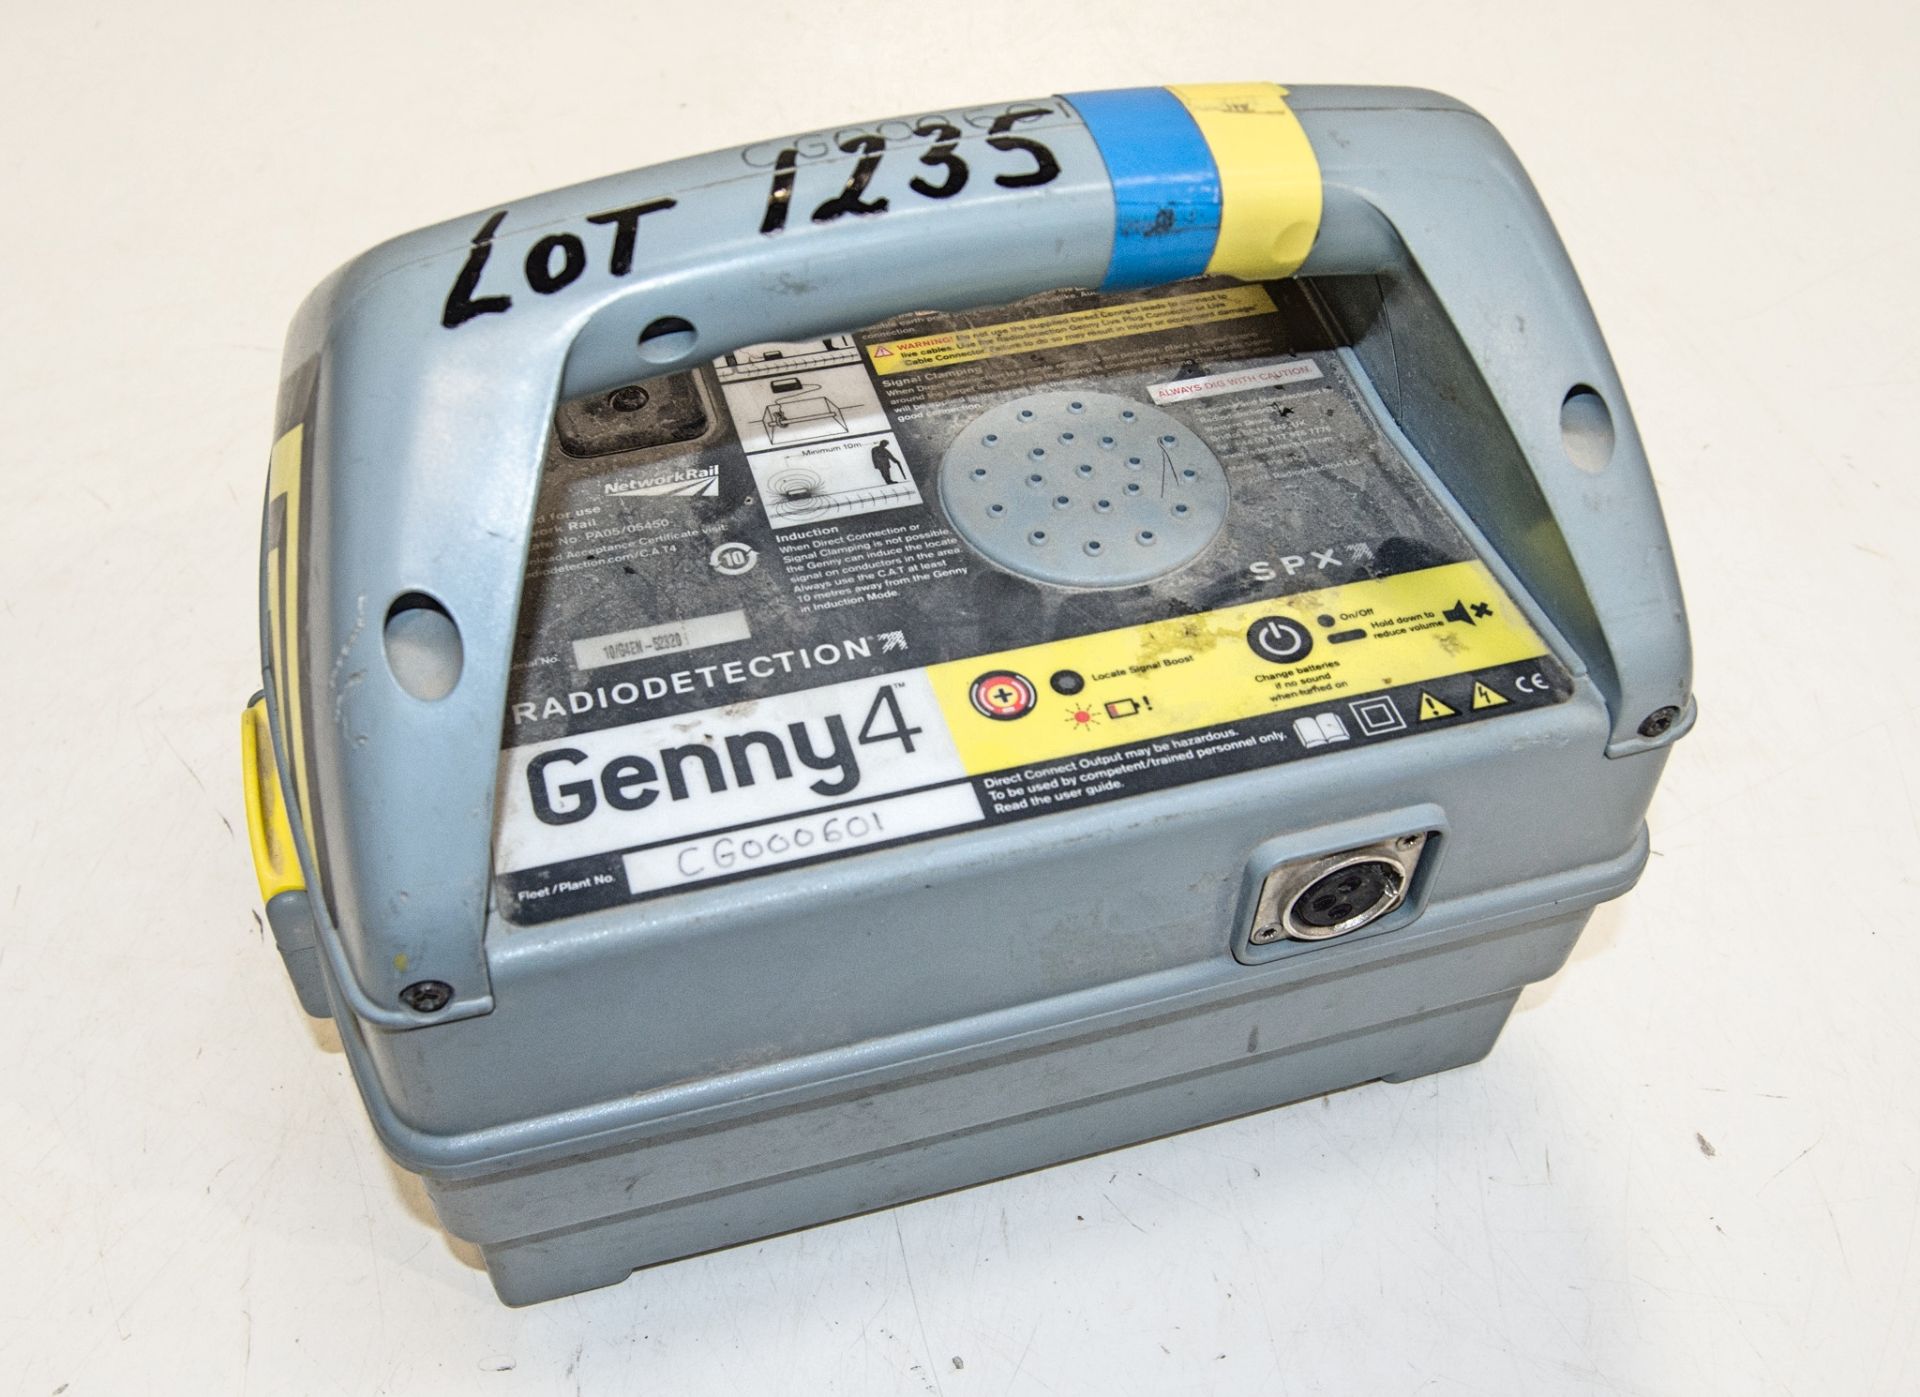 Radiodetection Genny 4 signal generator CG000601